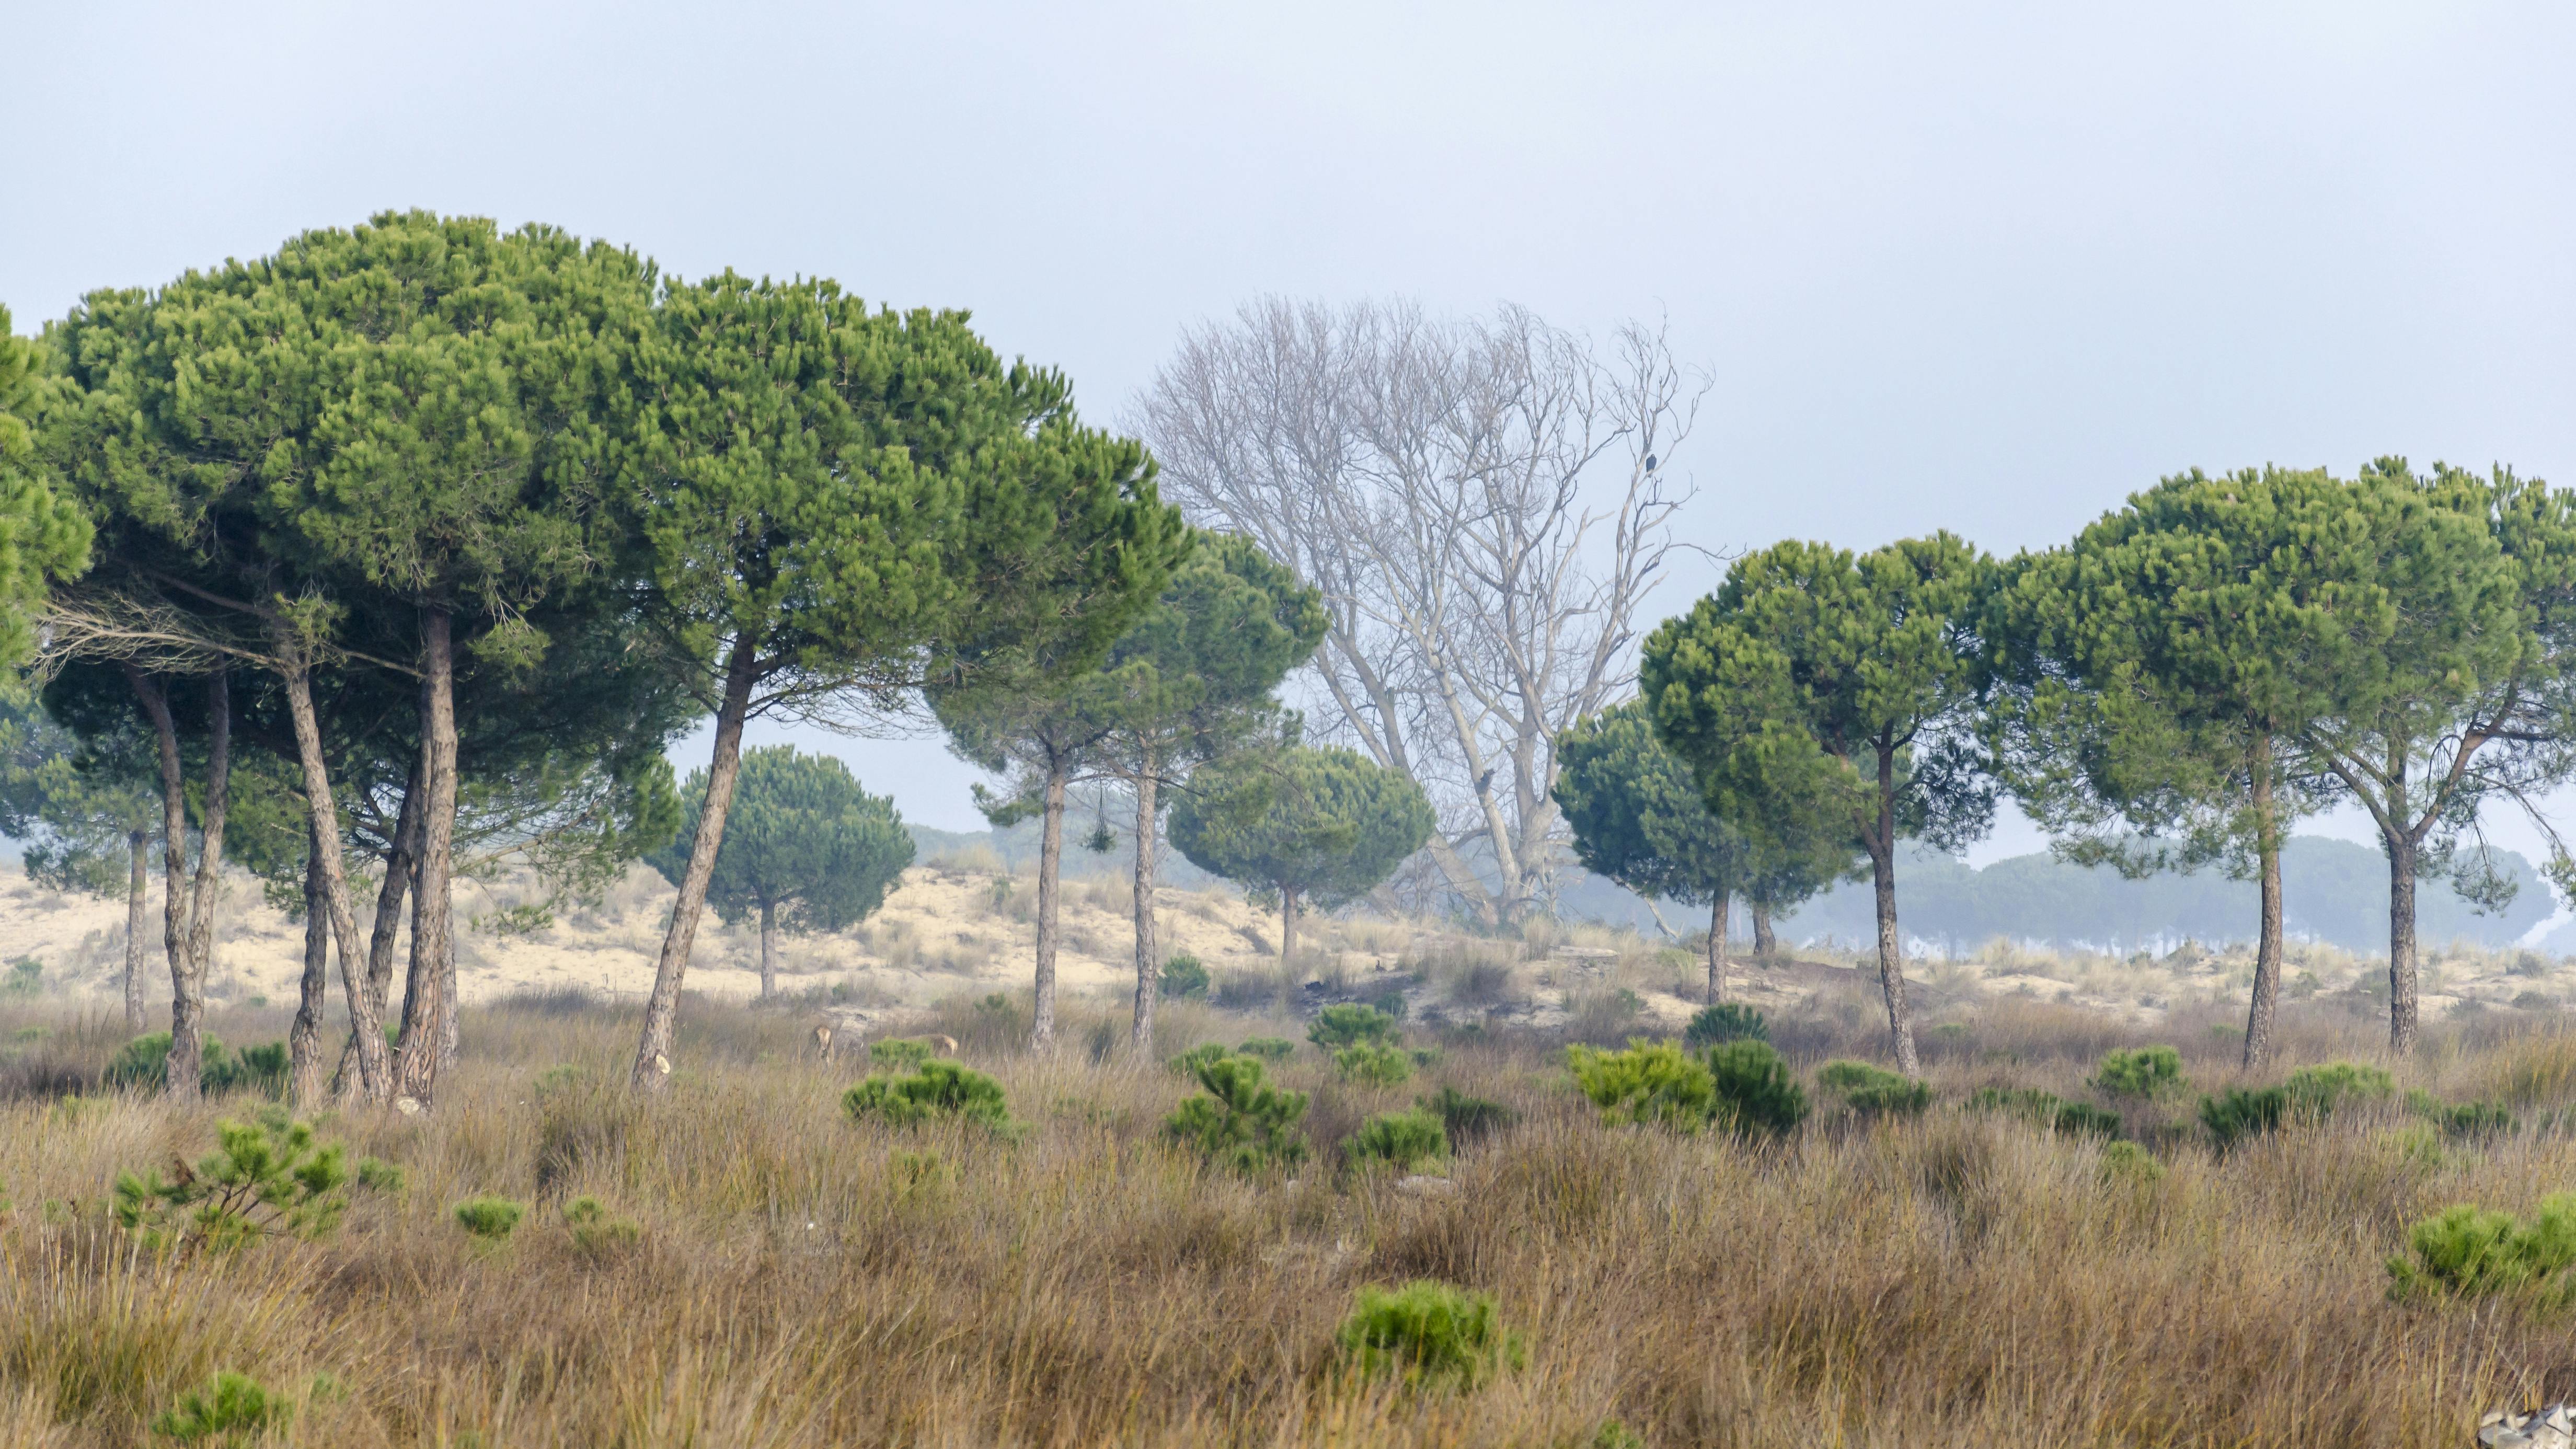 Doñana National Park